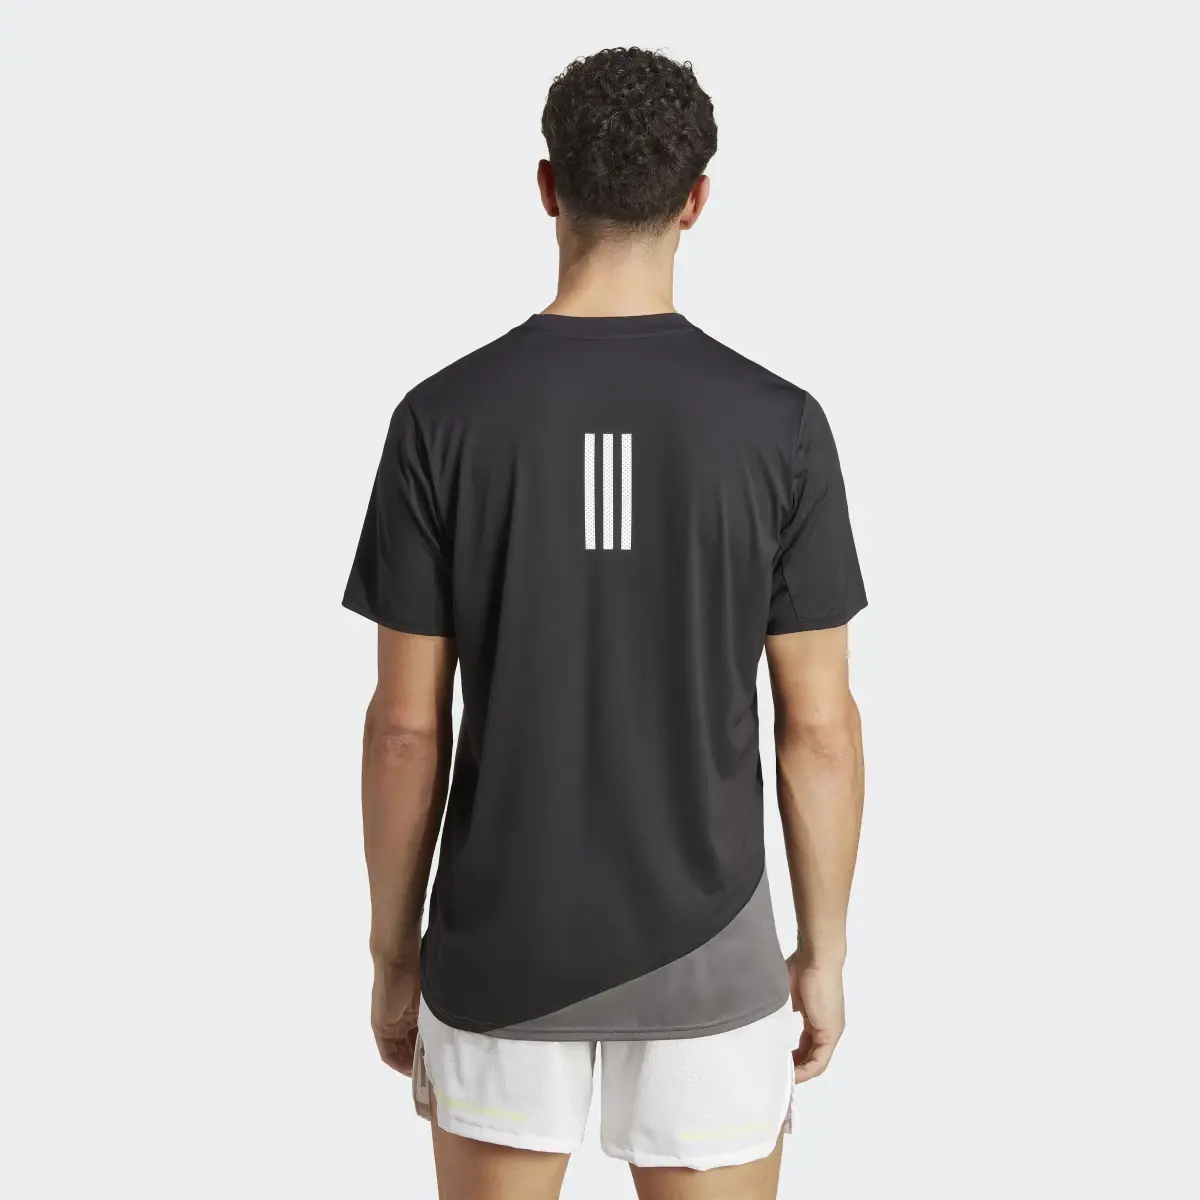 Adidas T-shirt da running Made To Be Remade. 3